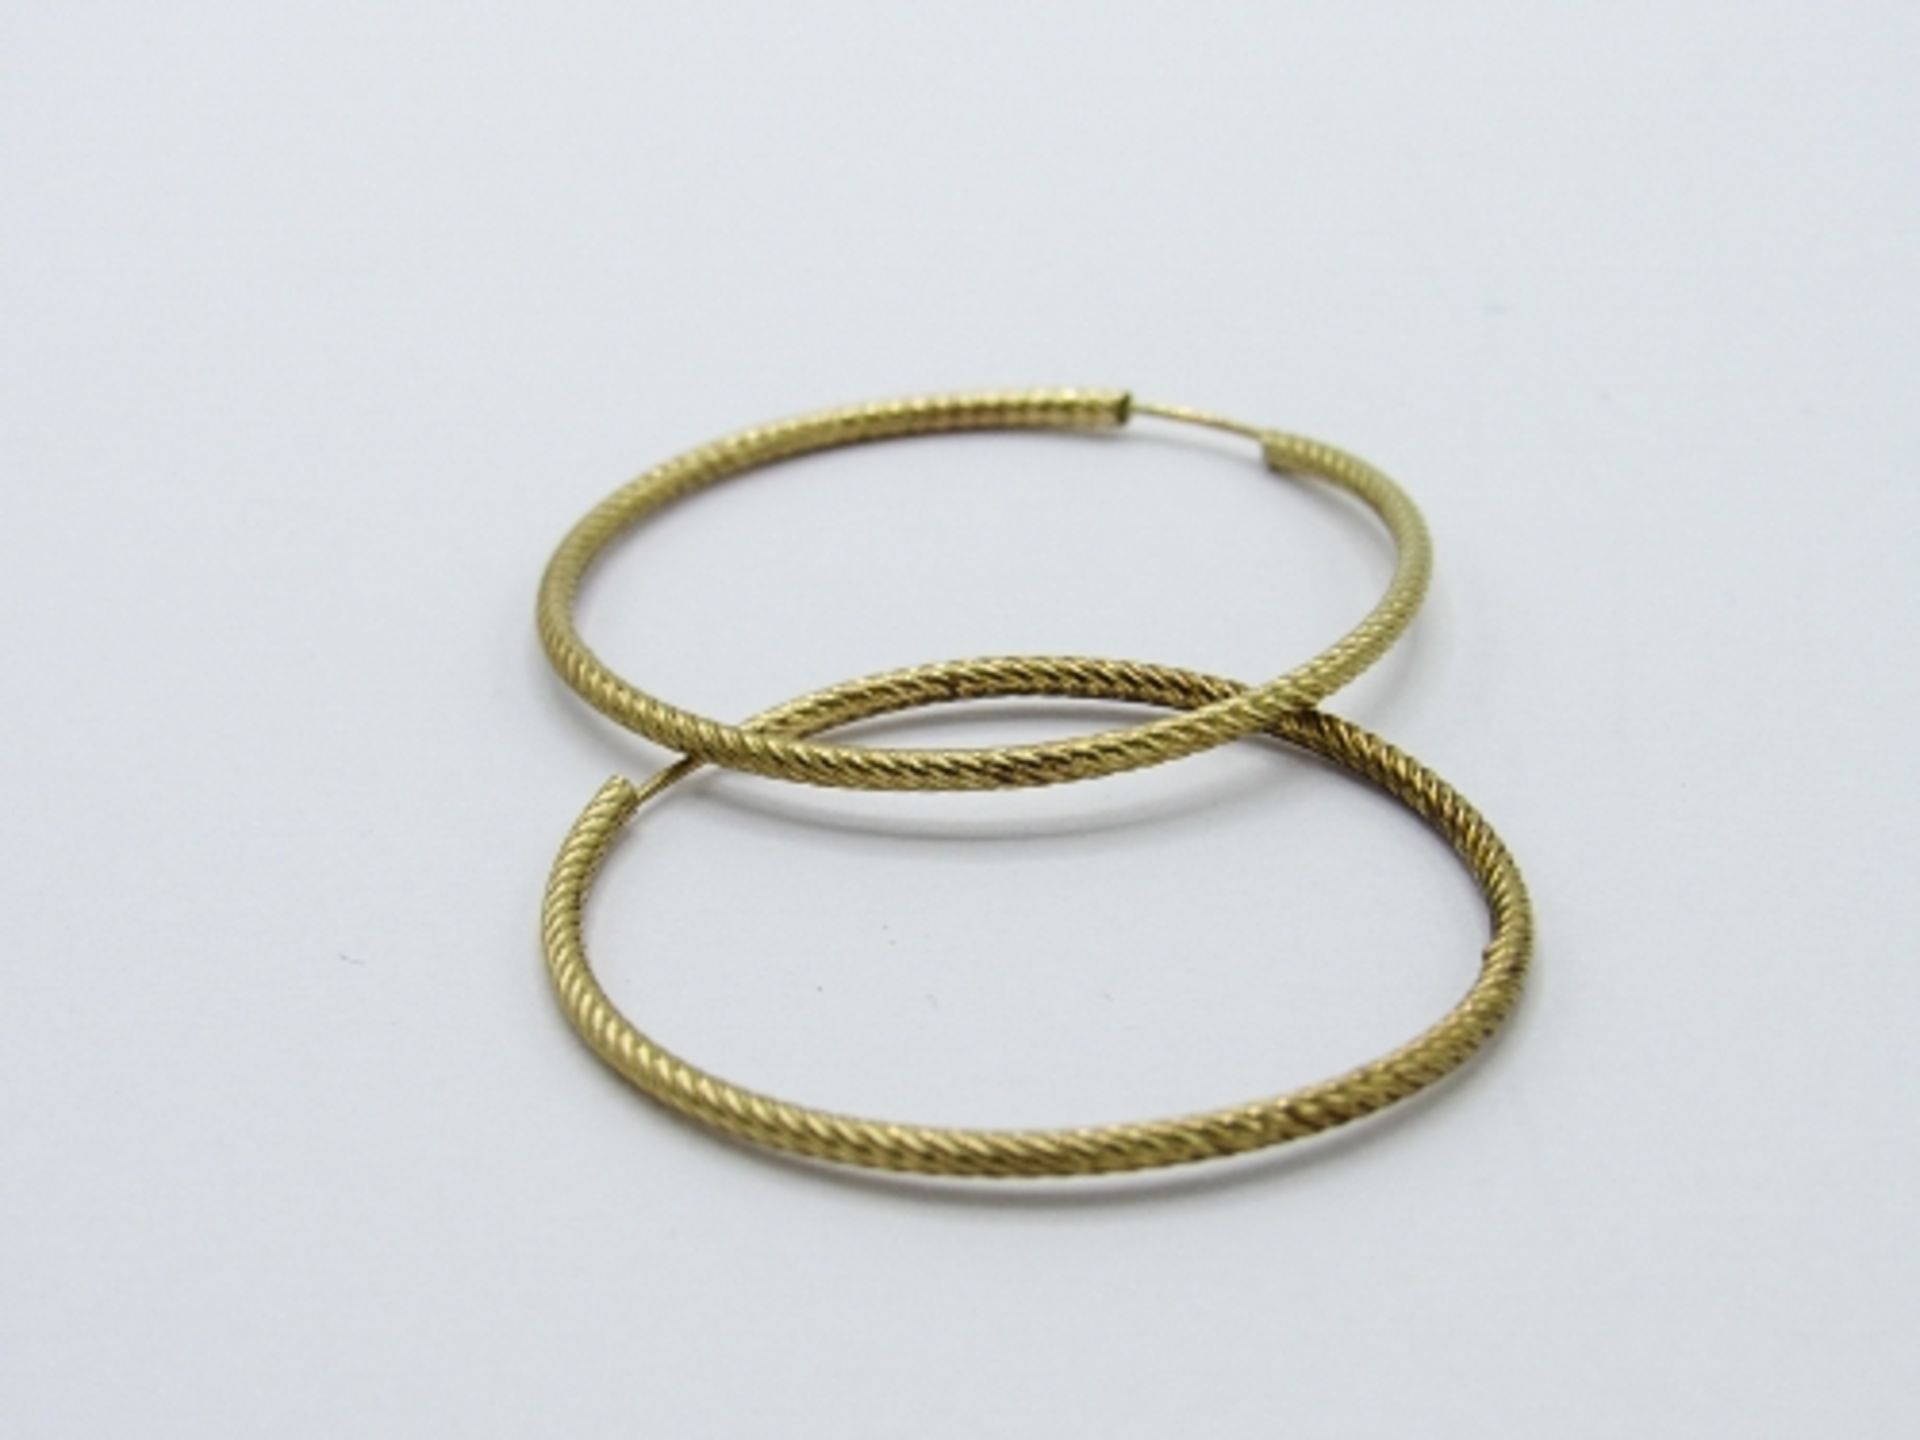 White metal peridot stud earrings with 9ct gold backs & a pair of yellow metal hooped earrings. - Image 3 of 4